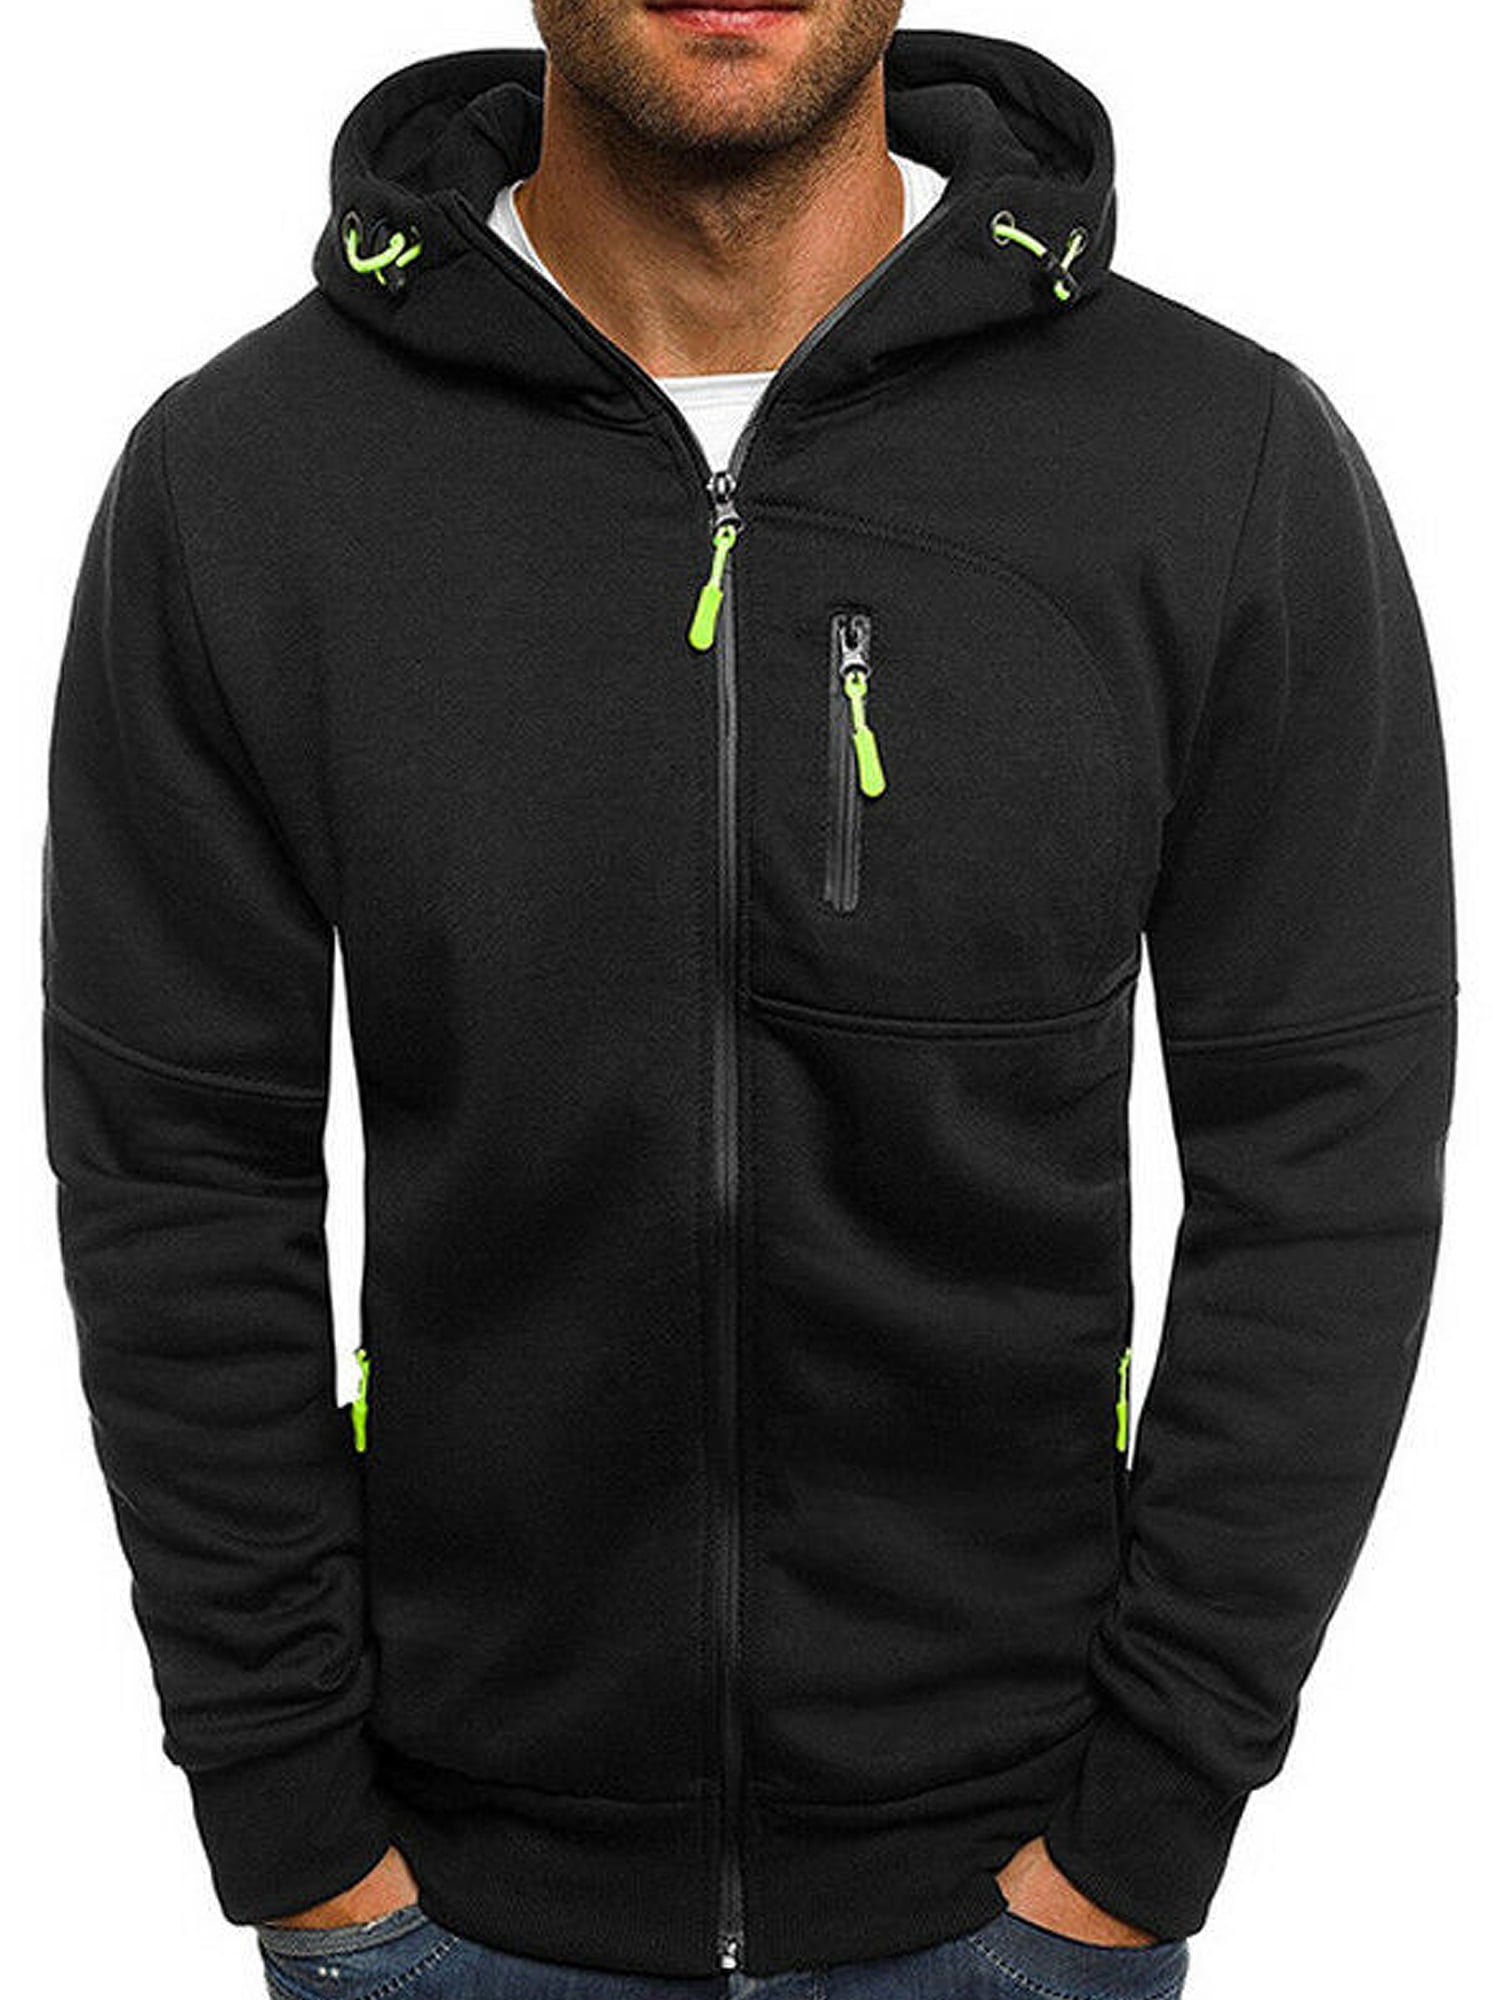 Fullvigor Mens Long Sleeve Zip Up Hoodie Jacket Sweatshirt - Walmart.com